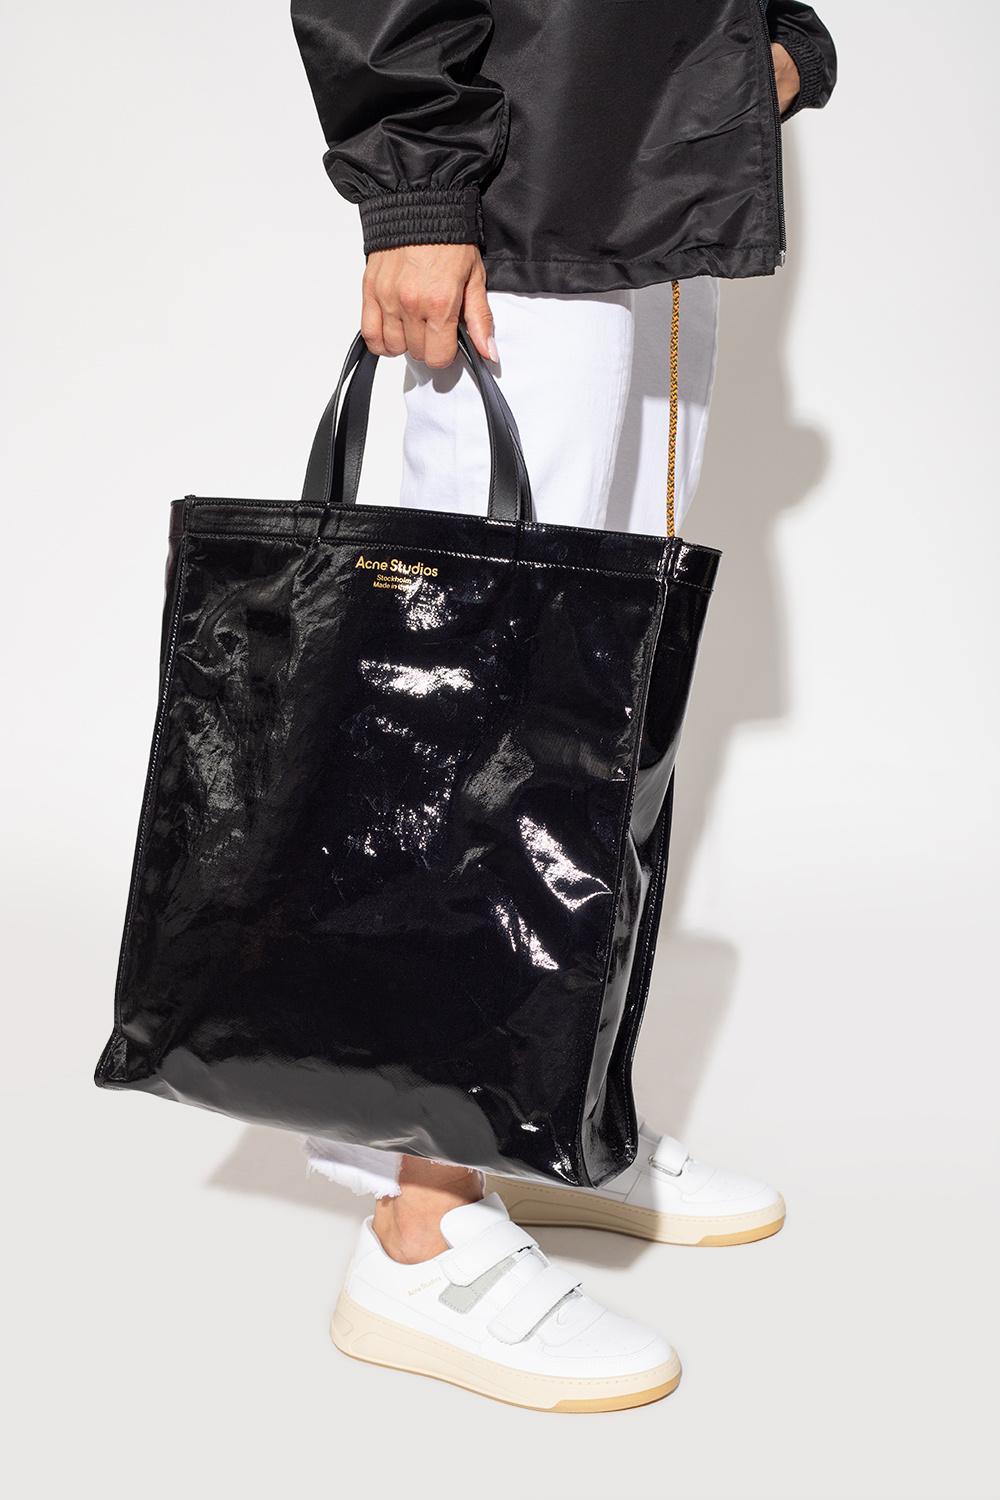 Acne Studios Shiny Shopper Bag in Black | Lyst